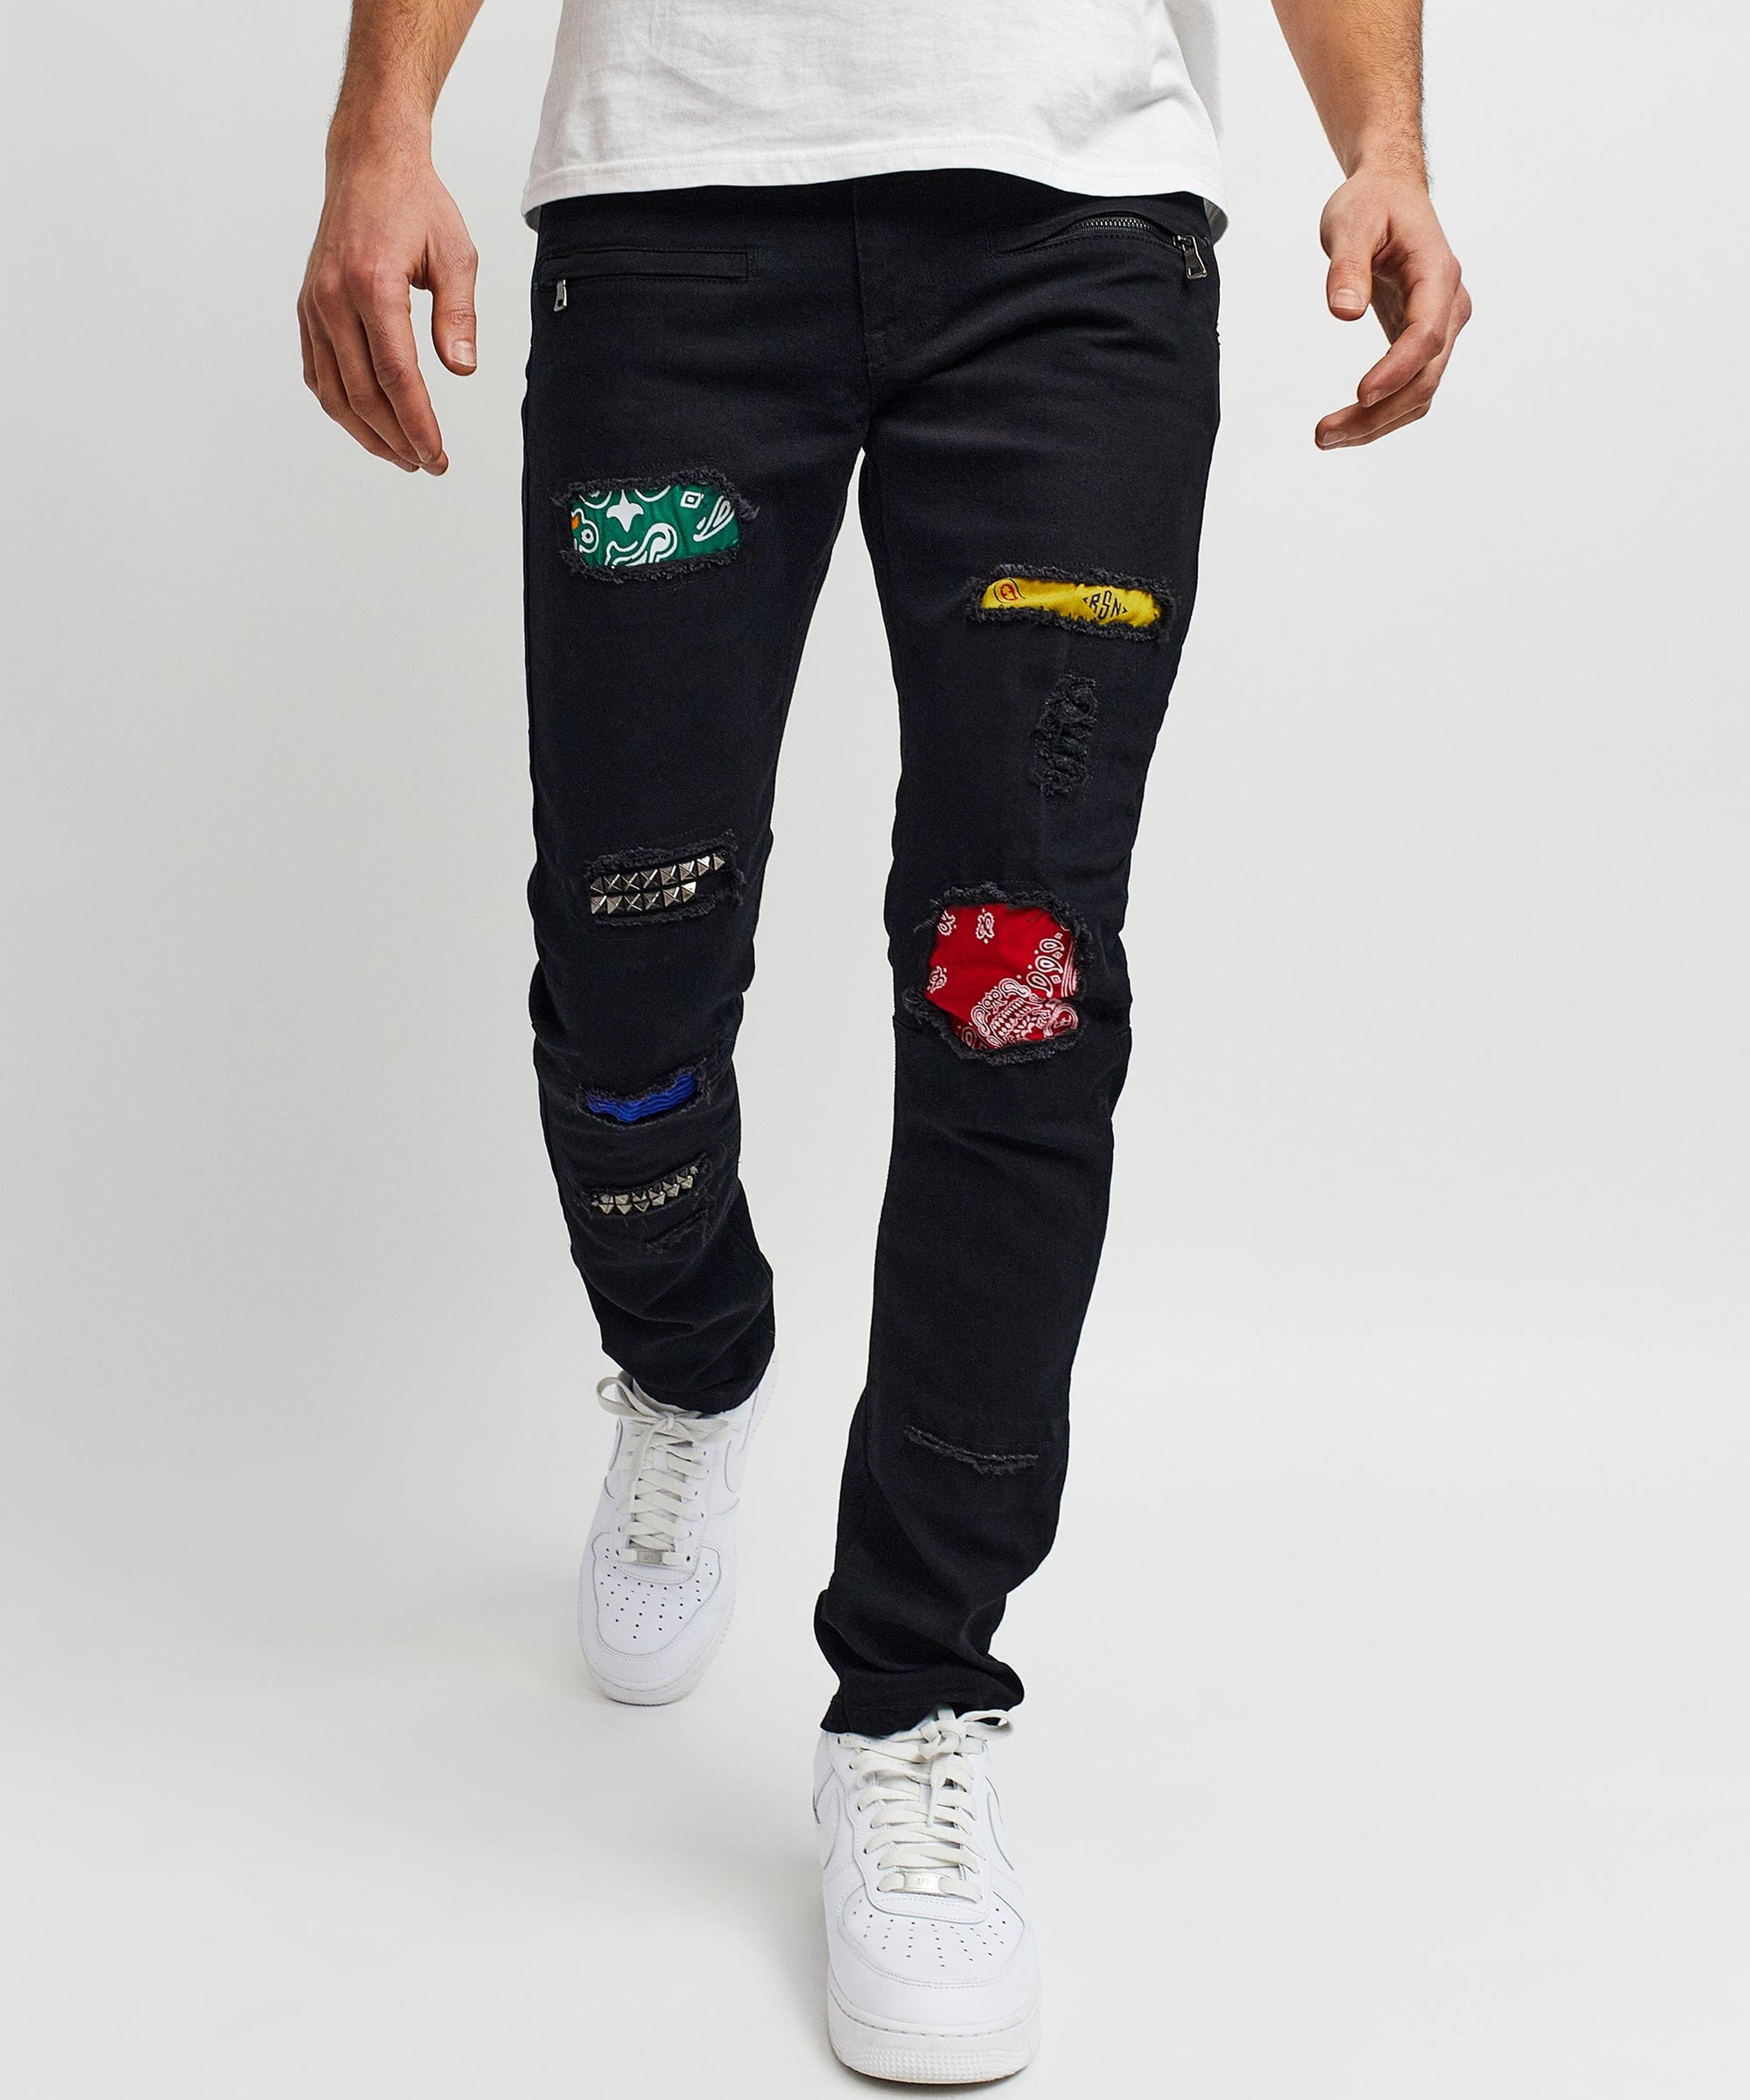 Alternate View 1 of Pike Bandana Color Back Black Denim Jeans